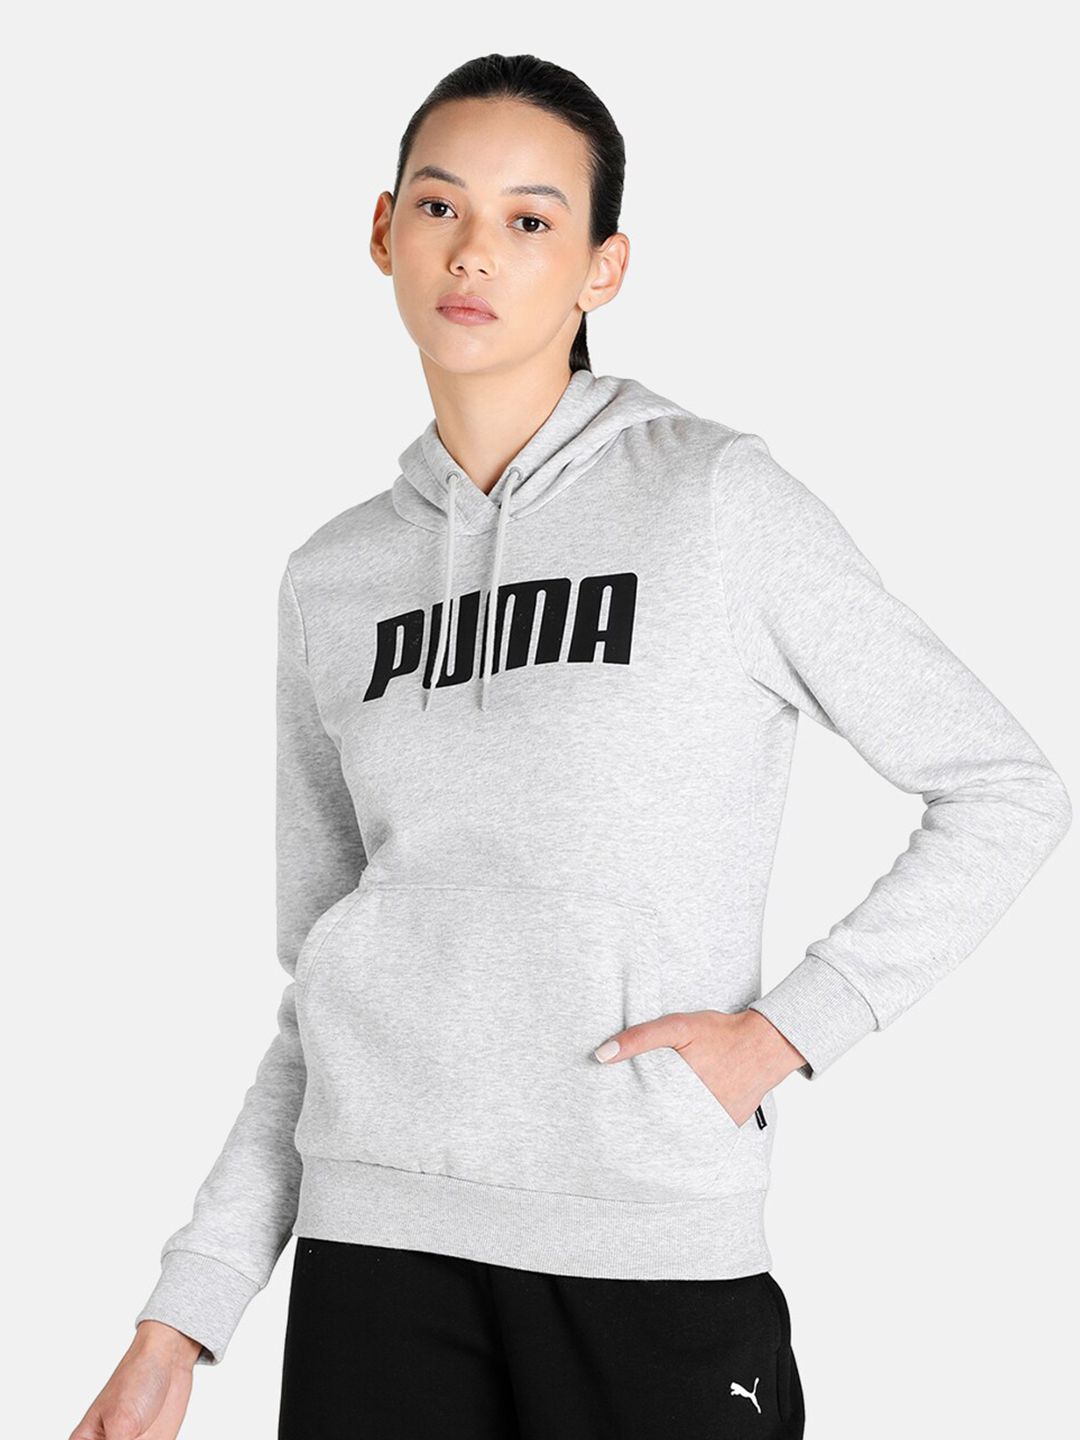 Puma Women Grey Printed Hooded Sweatshirt Price in India